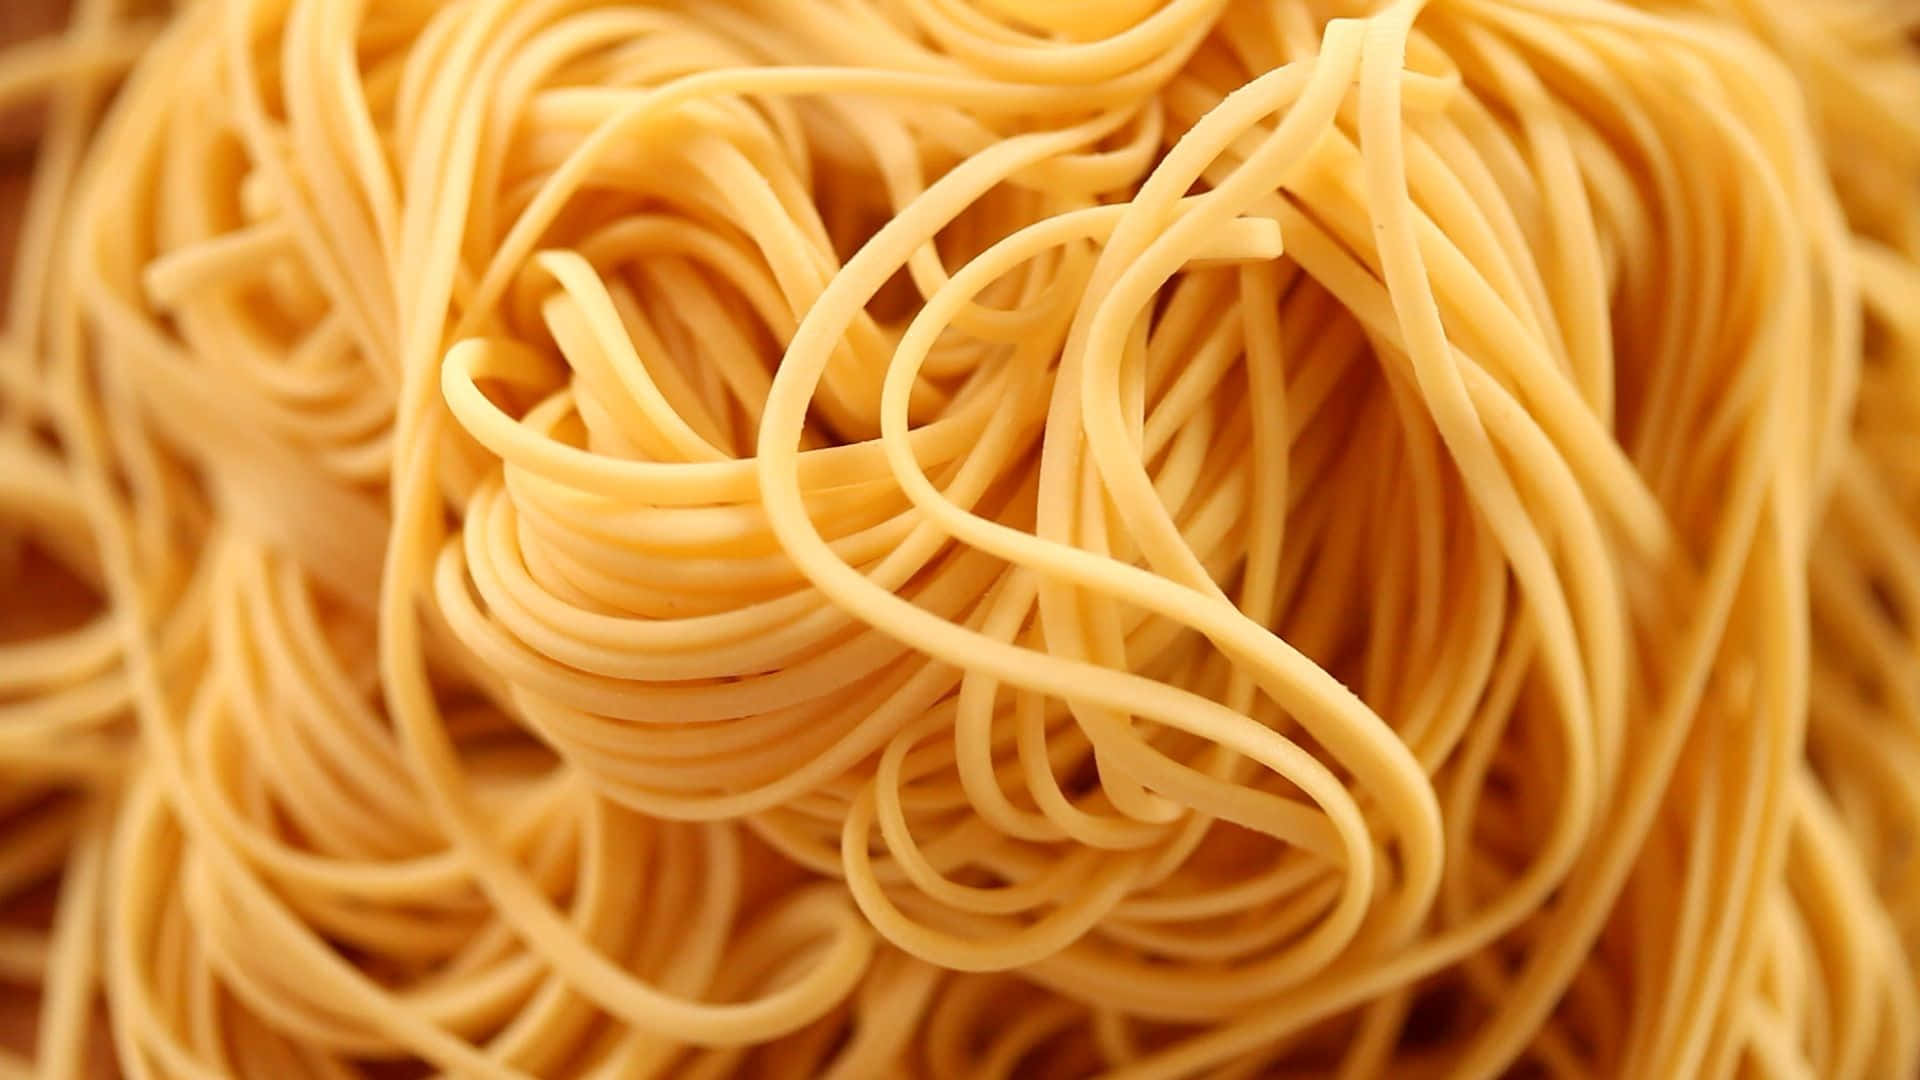 Simple Spaghetti 1920x1080 Pasta Background